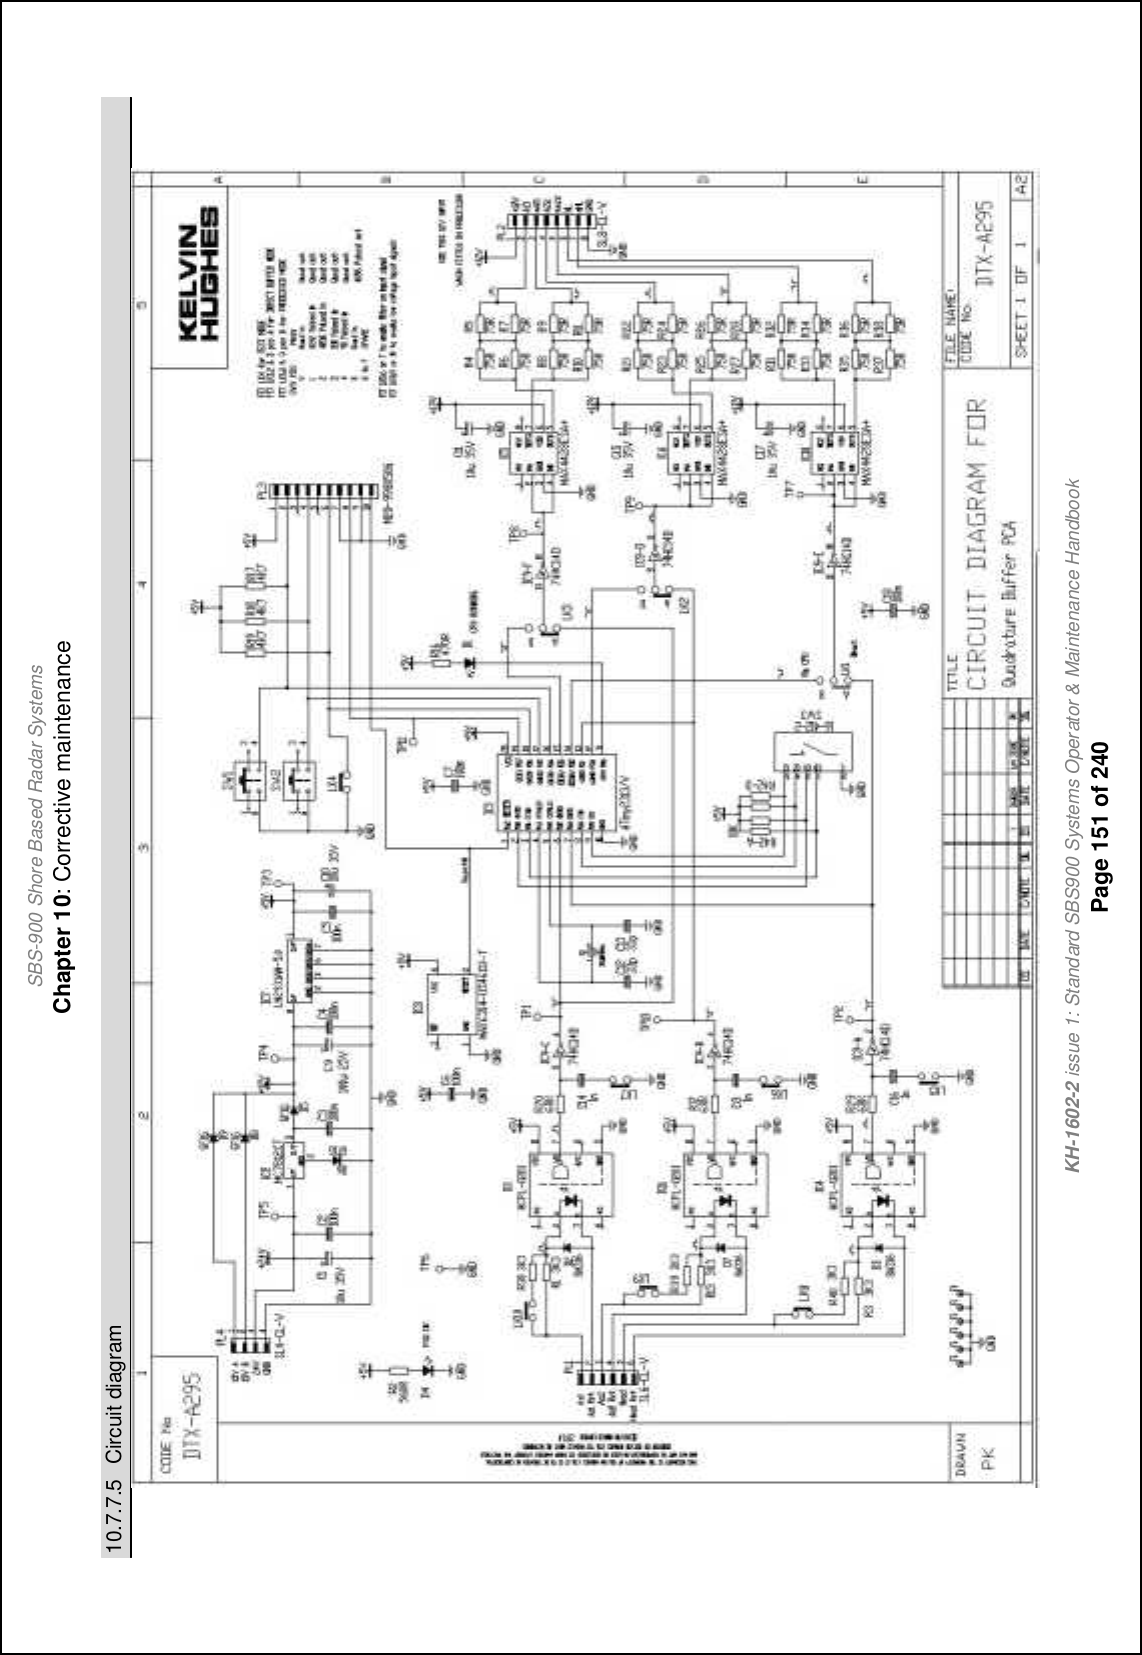 SBS-900 Shore Based Radar SystemsChapter 10: Corrective maintenanceKH-1602-2 issue 1: Standard SBS900 Systems Operator &amp; Maintenance HandbookPage 151 of 24010.7.7.5 Circuit diagram